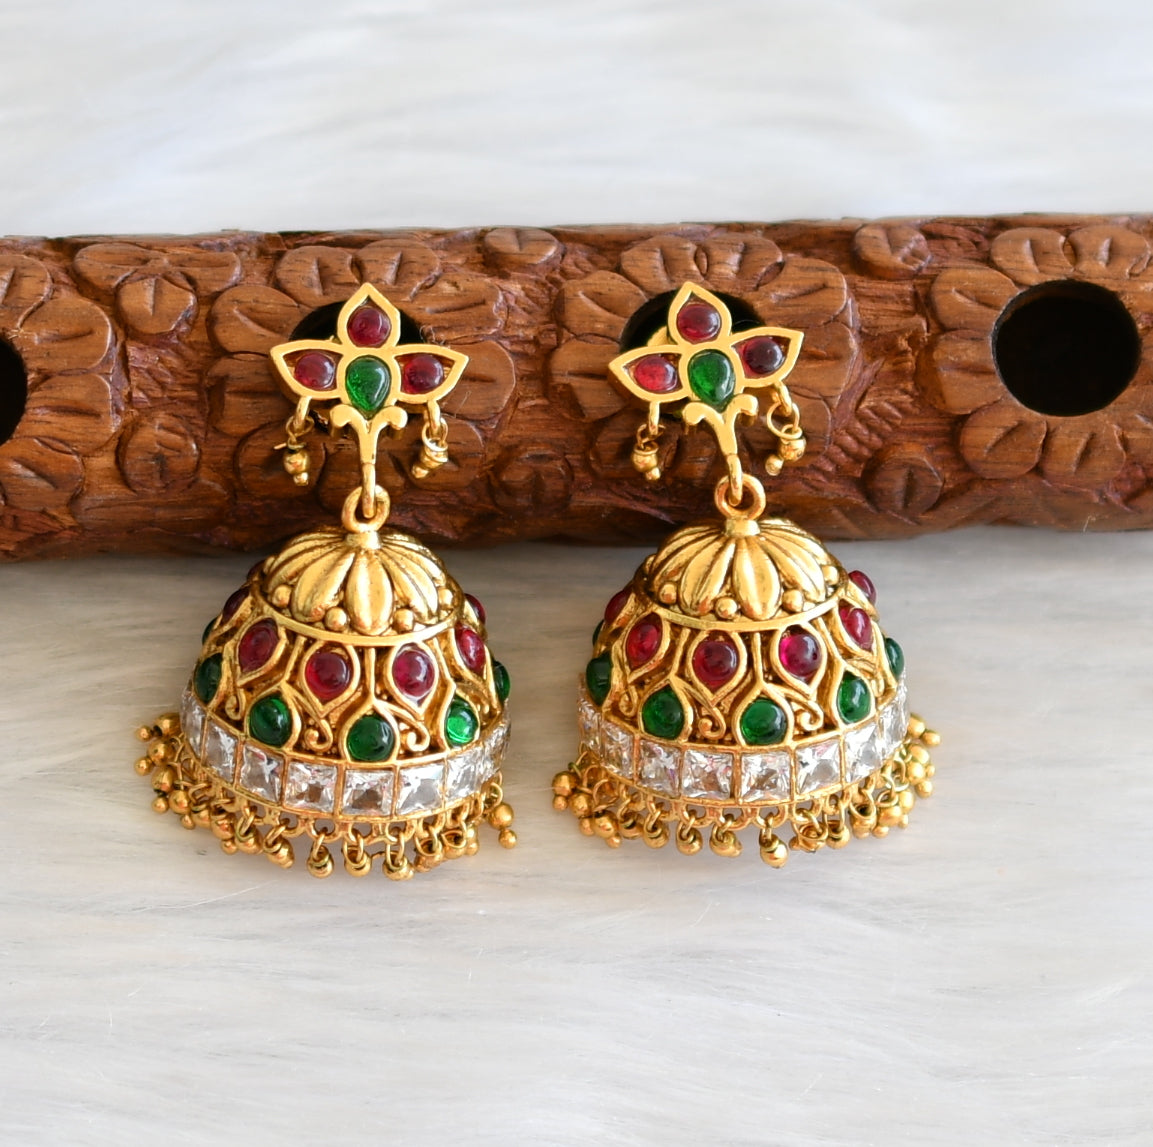 Chakra Sun Earrings - Kit or Finished Jewelry Finished Earrings